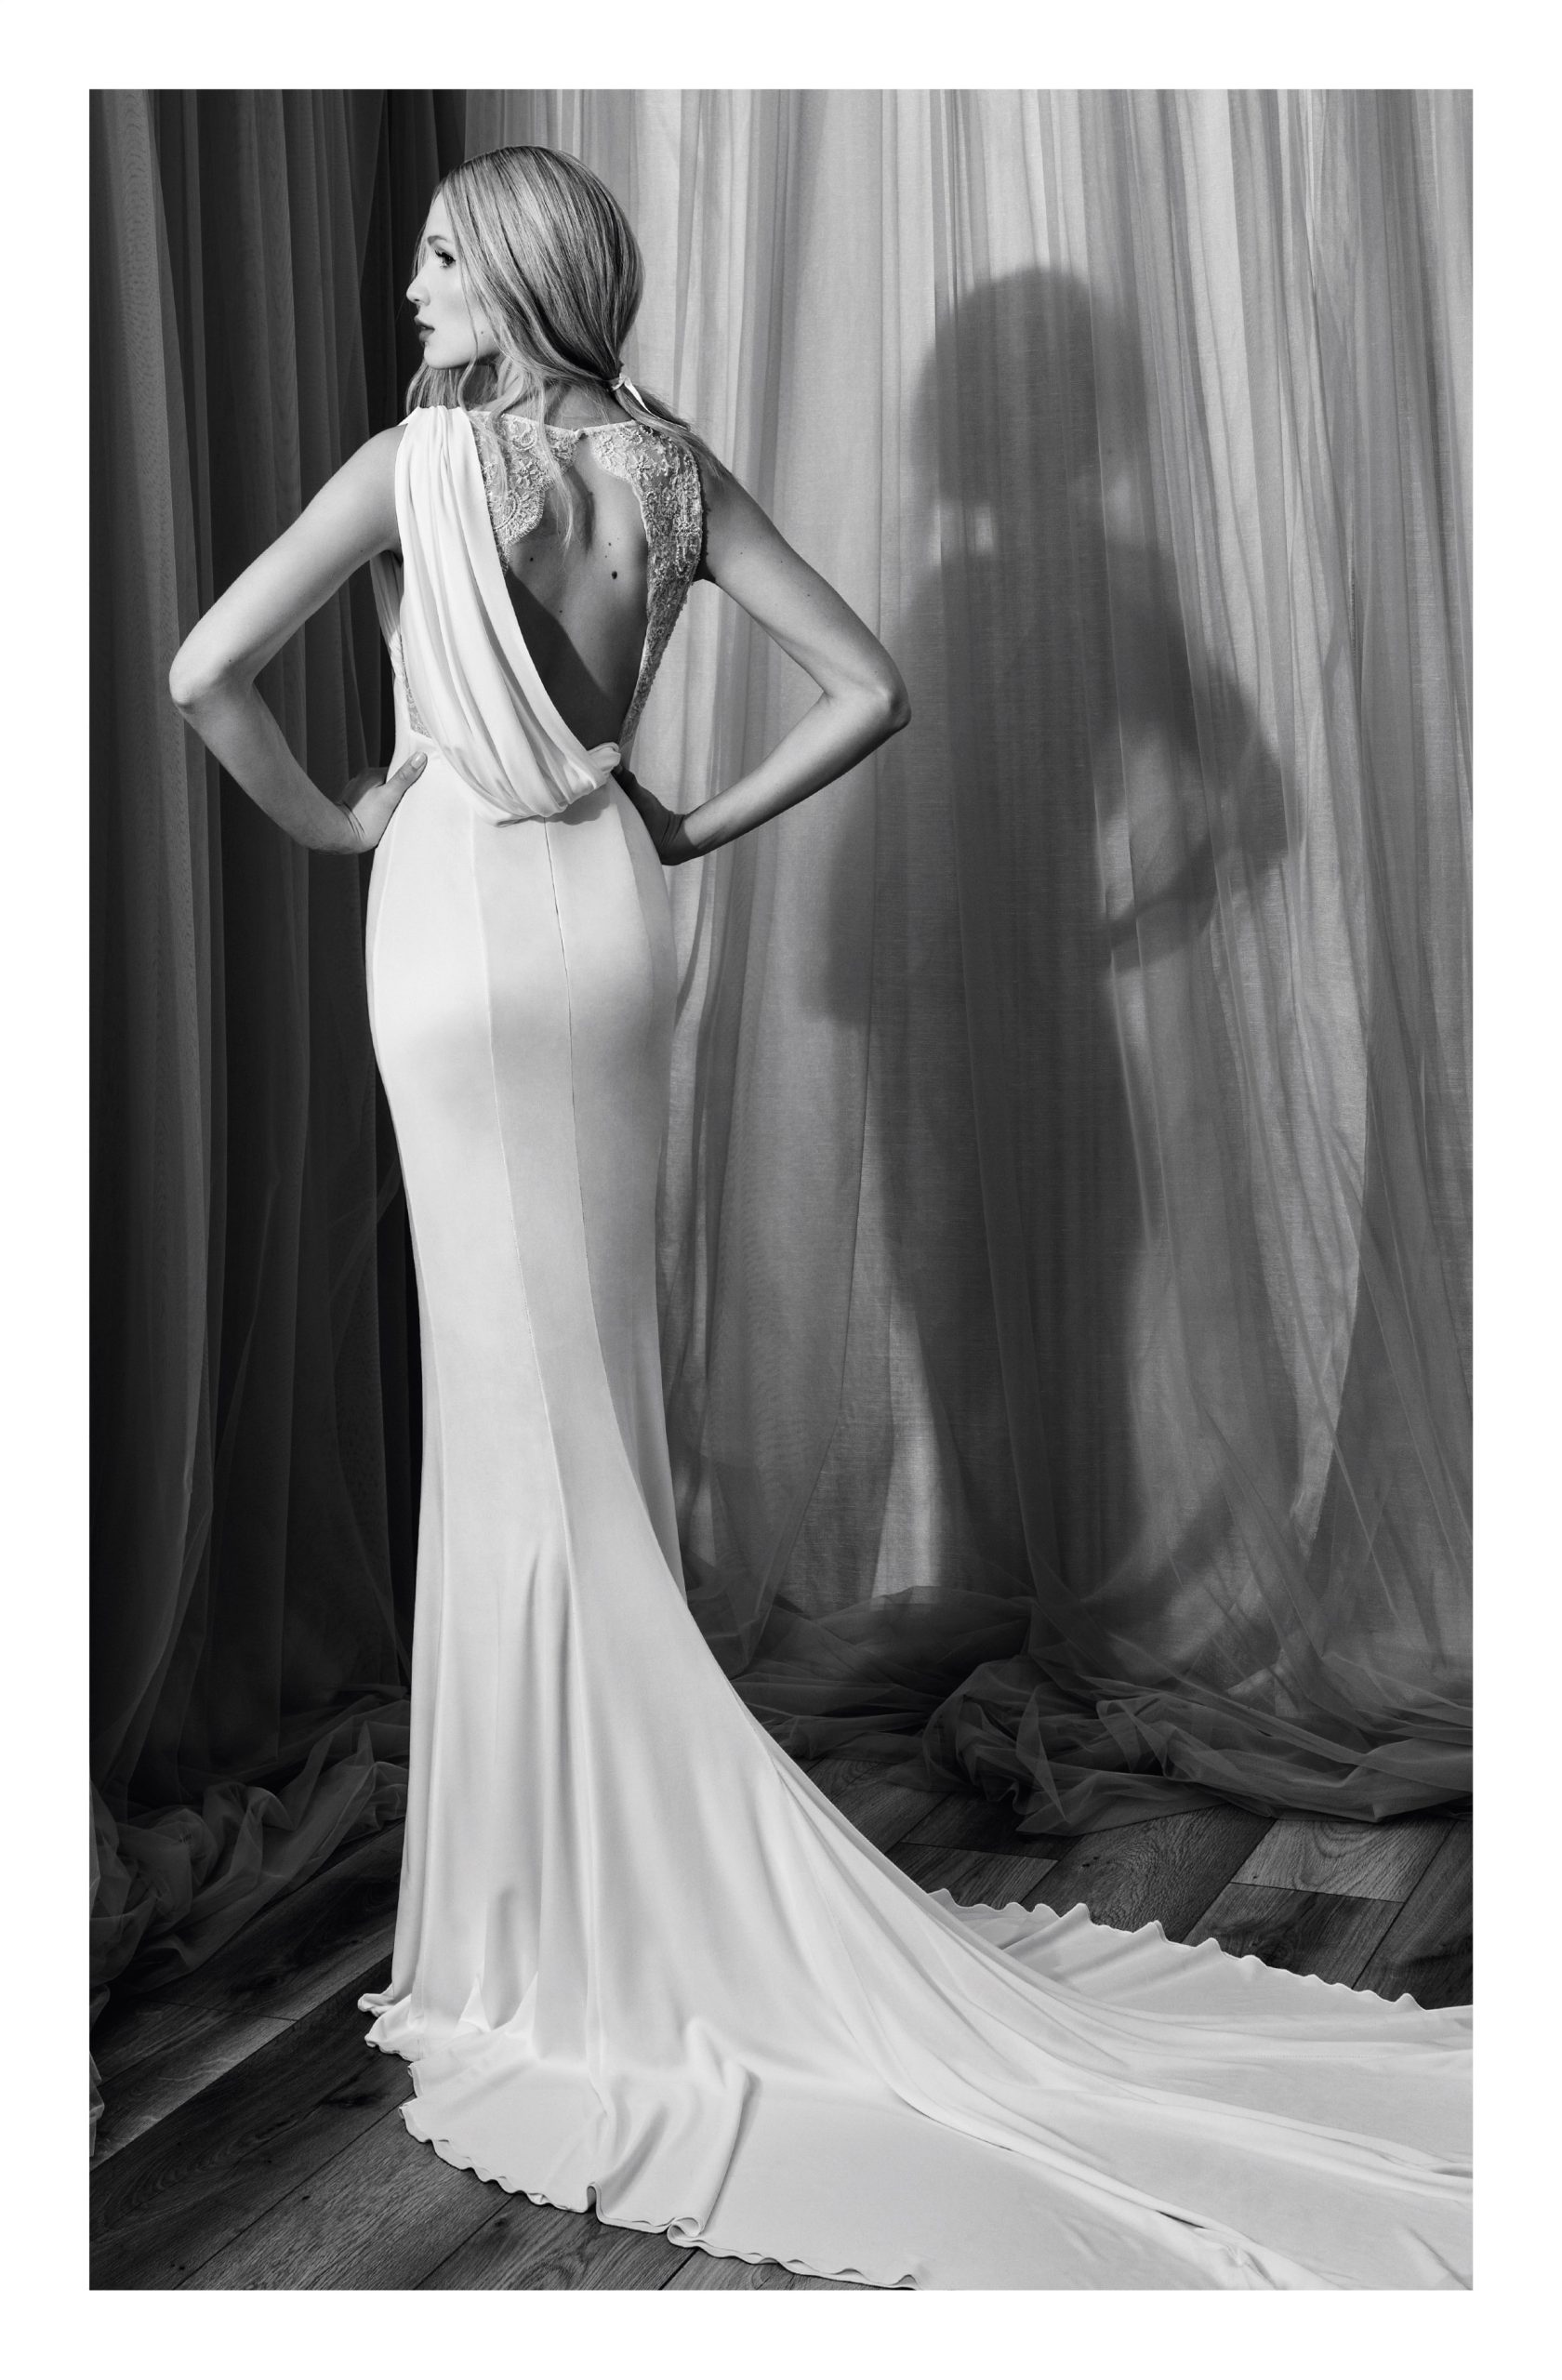 Anna Dello Russo Wearing Roberto Cavalli and A Fab Bridal Headpiece  Inspiration  Sharon Haver  FocusOnStylecom